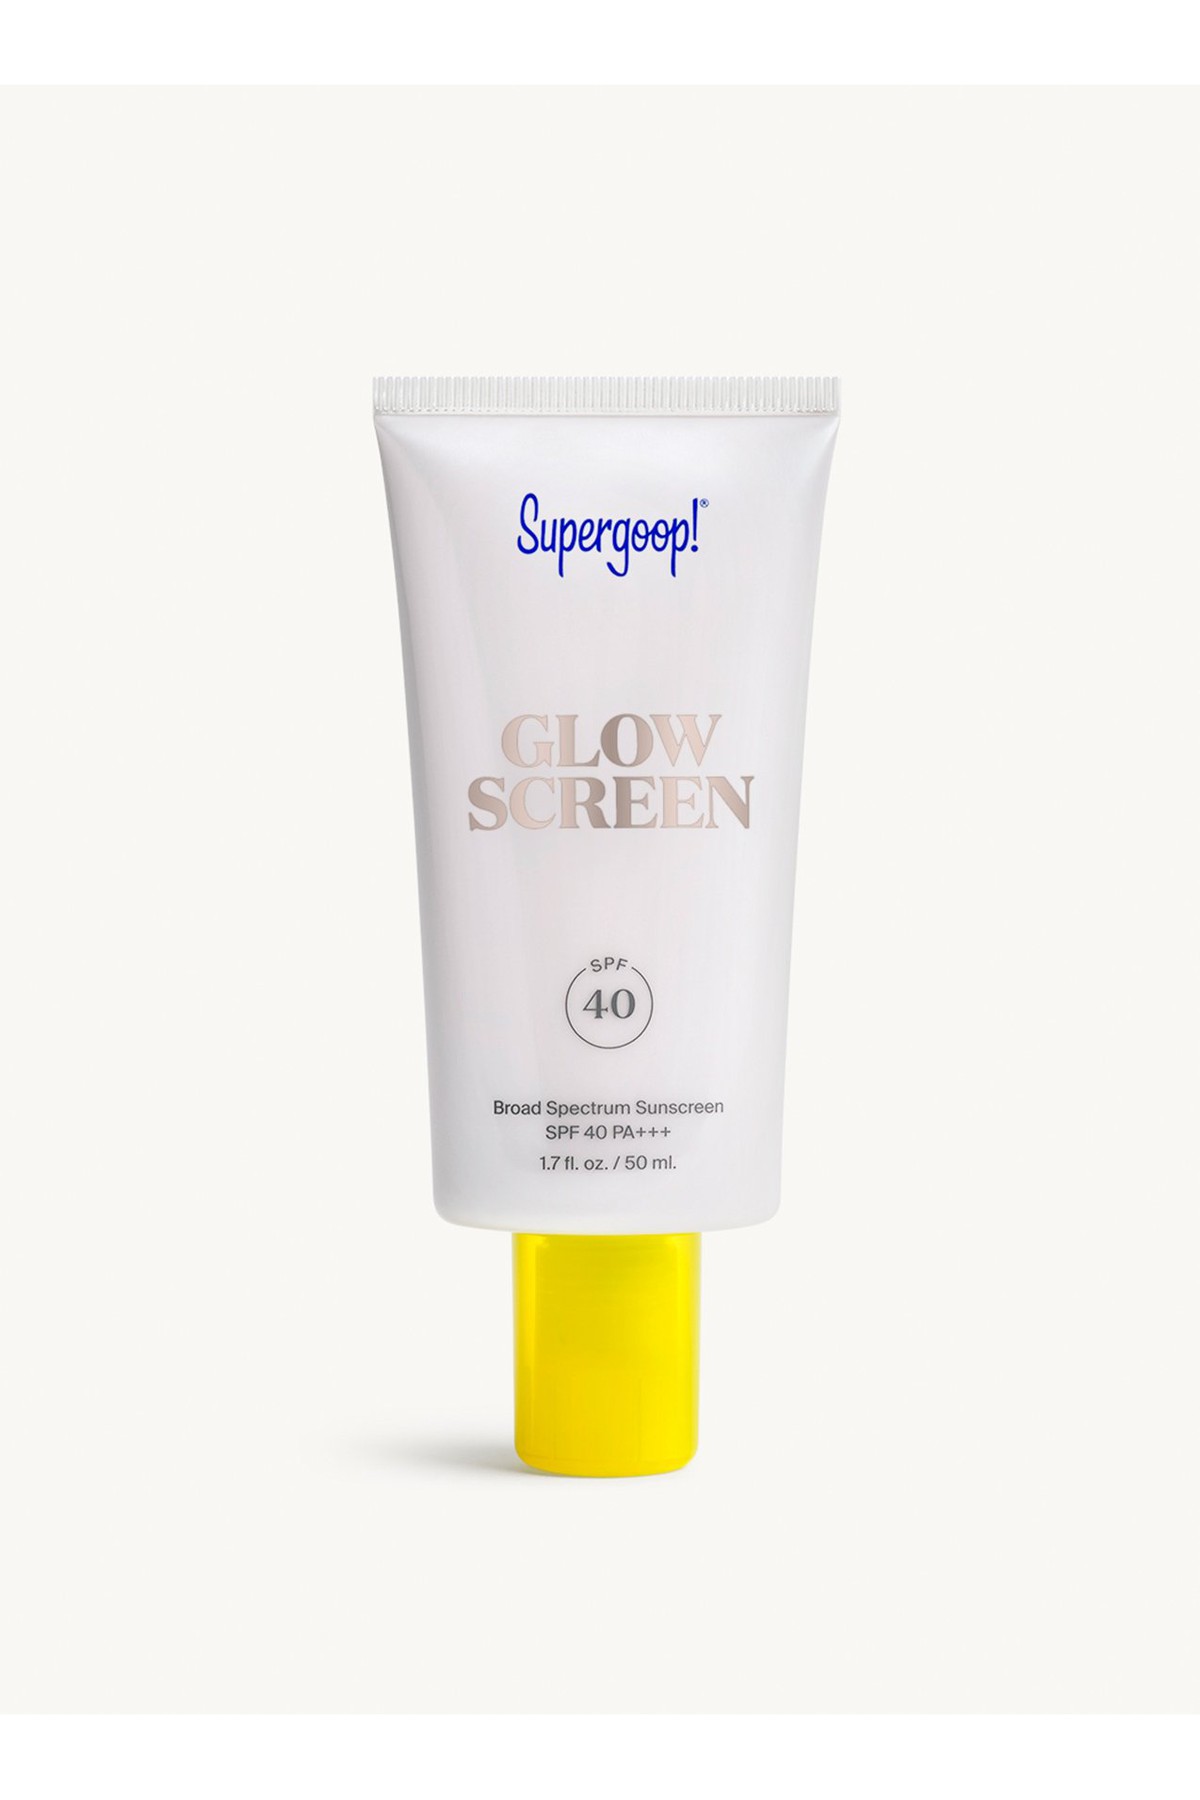 Glowscreen SPF 40 by Supergoop